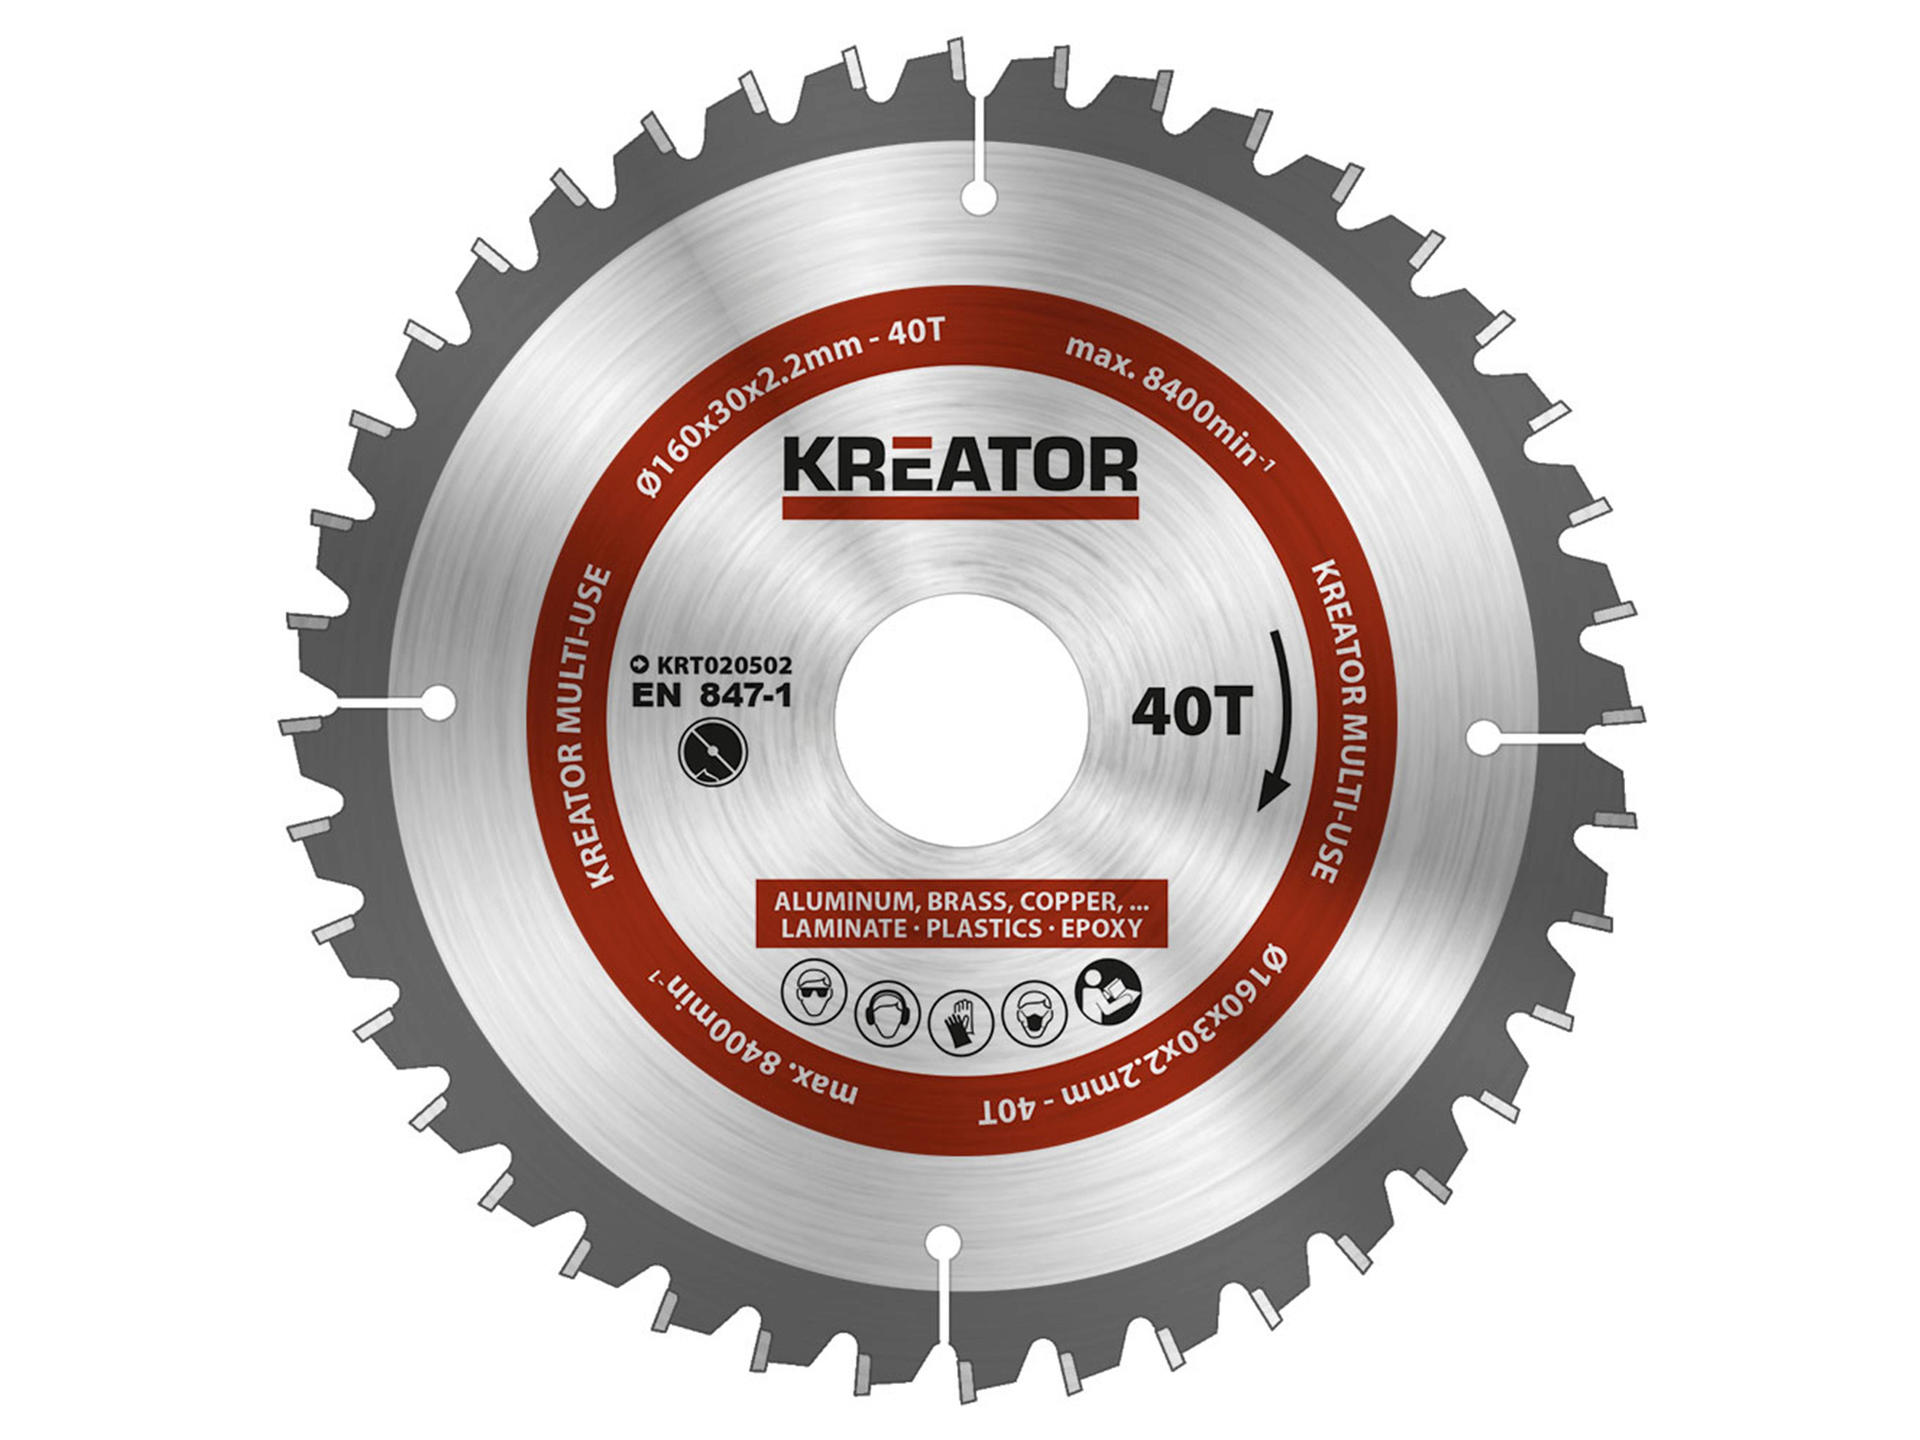 Kreator KRT020502 universeel cirkelzaagblad 160mm 40T